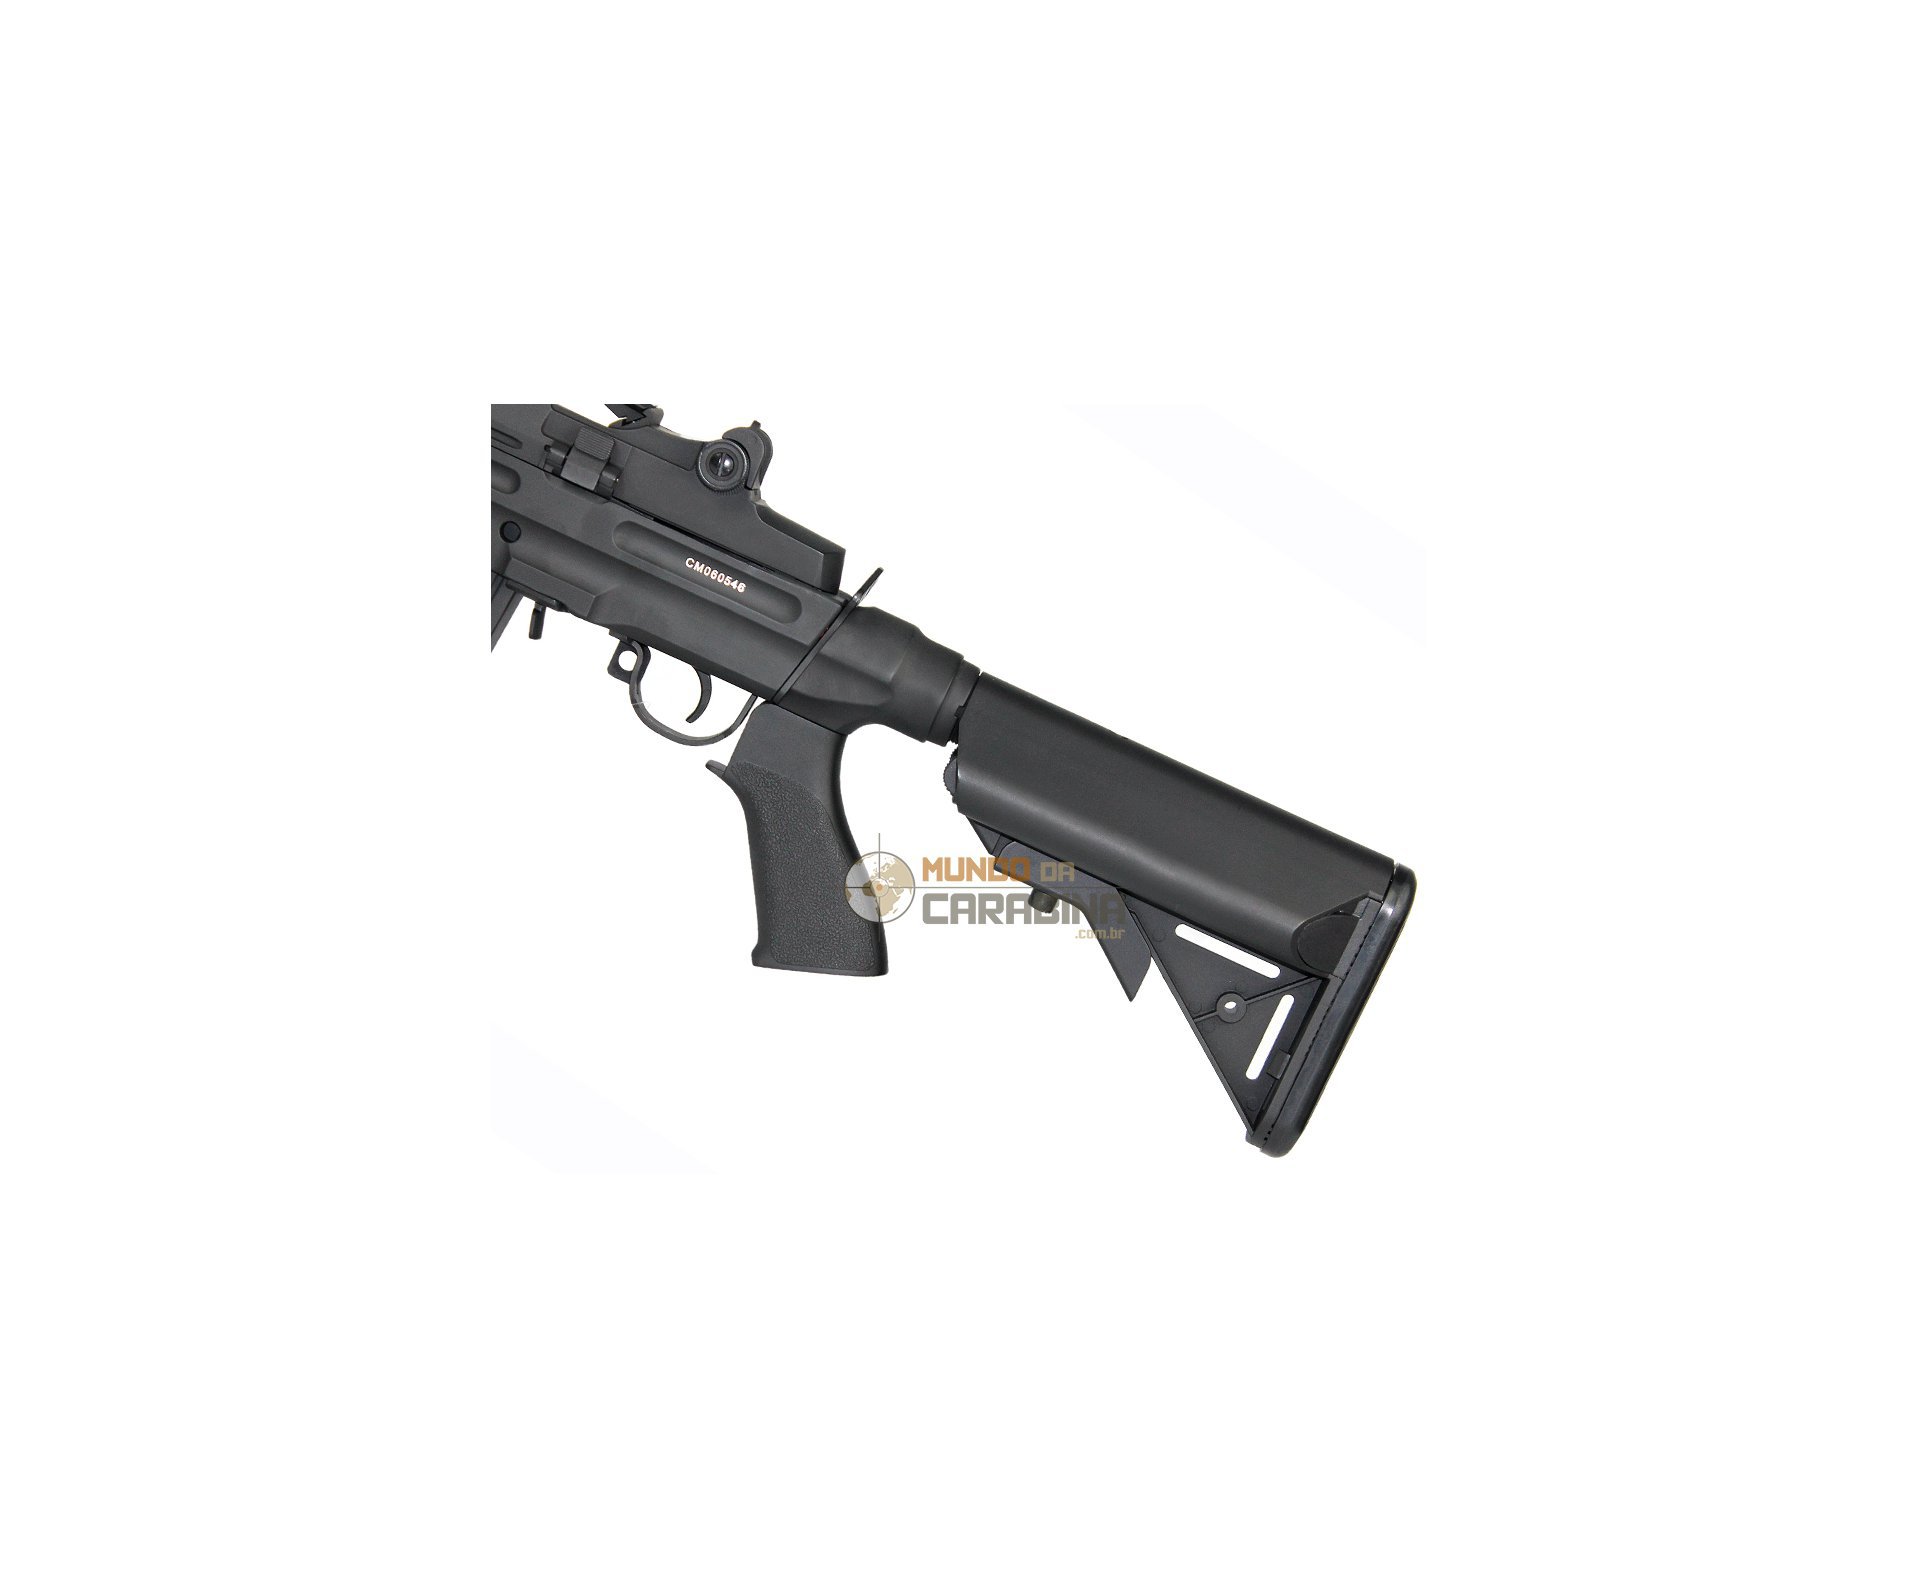 Rifle De Airsoft M14 Ebr Full Metal Aeg  Customizado 450 Fps Bivolt Cal 6,0mm -cyma